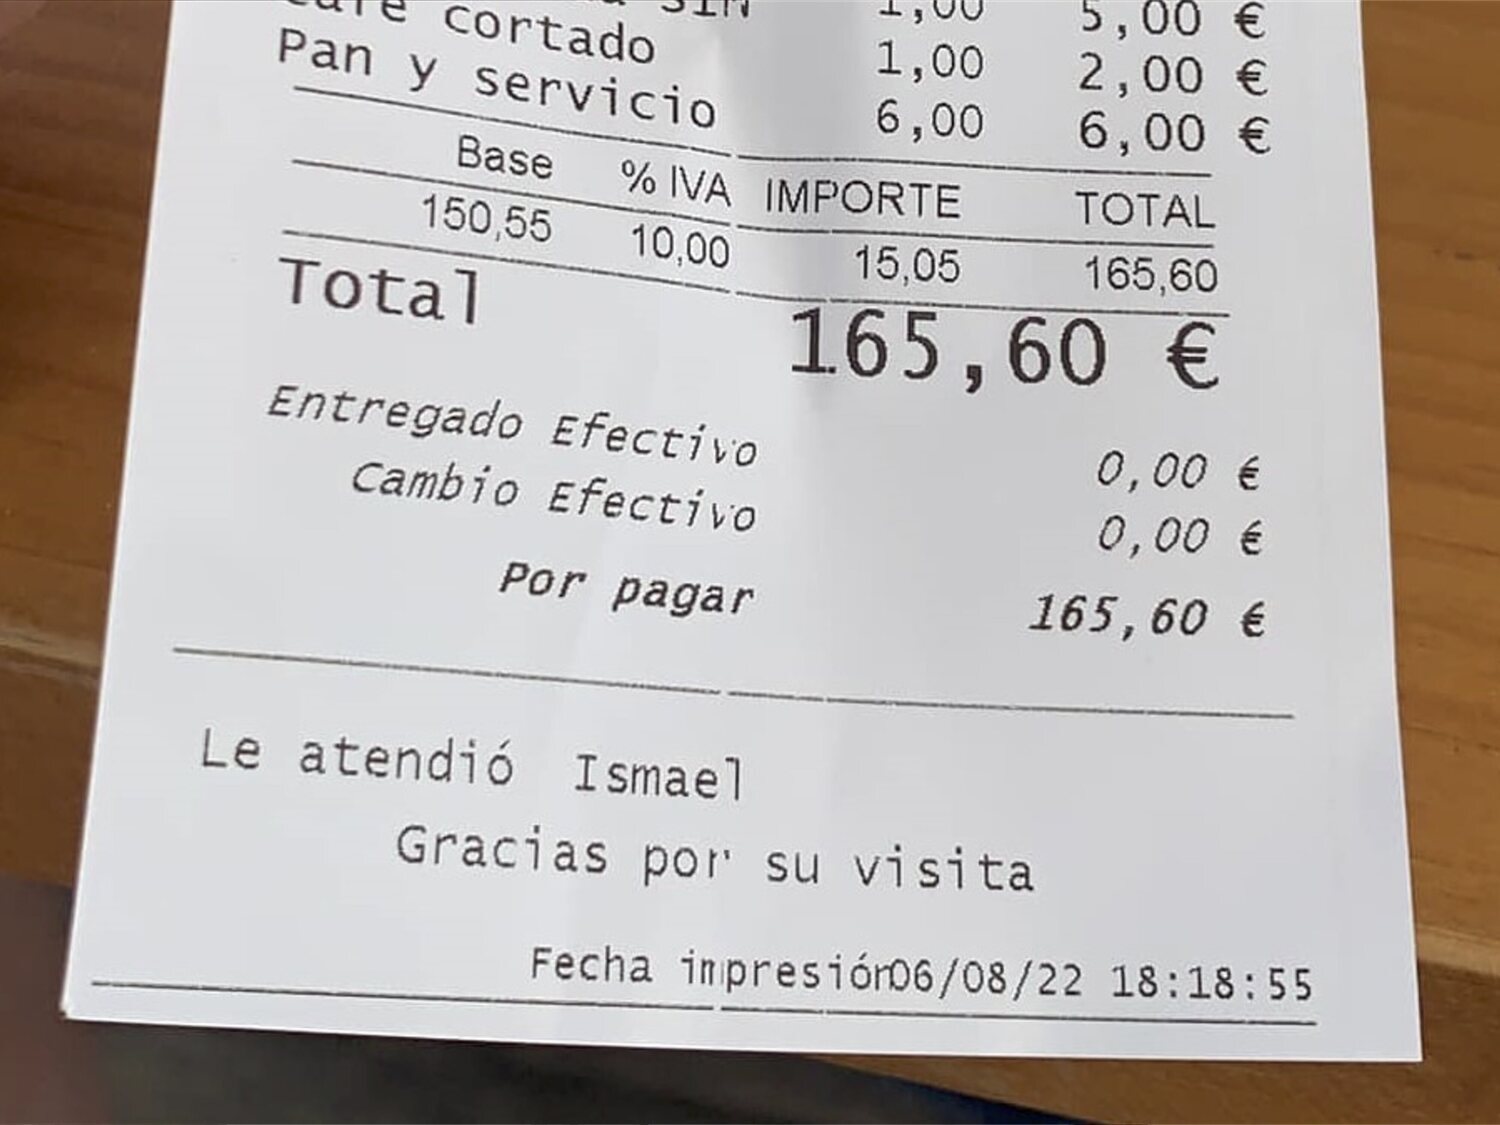 Sorprenden a una familia de seis miembros haciendo un 'sinpa' en un restaurante de Chipiona: 165 euros de factura